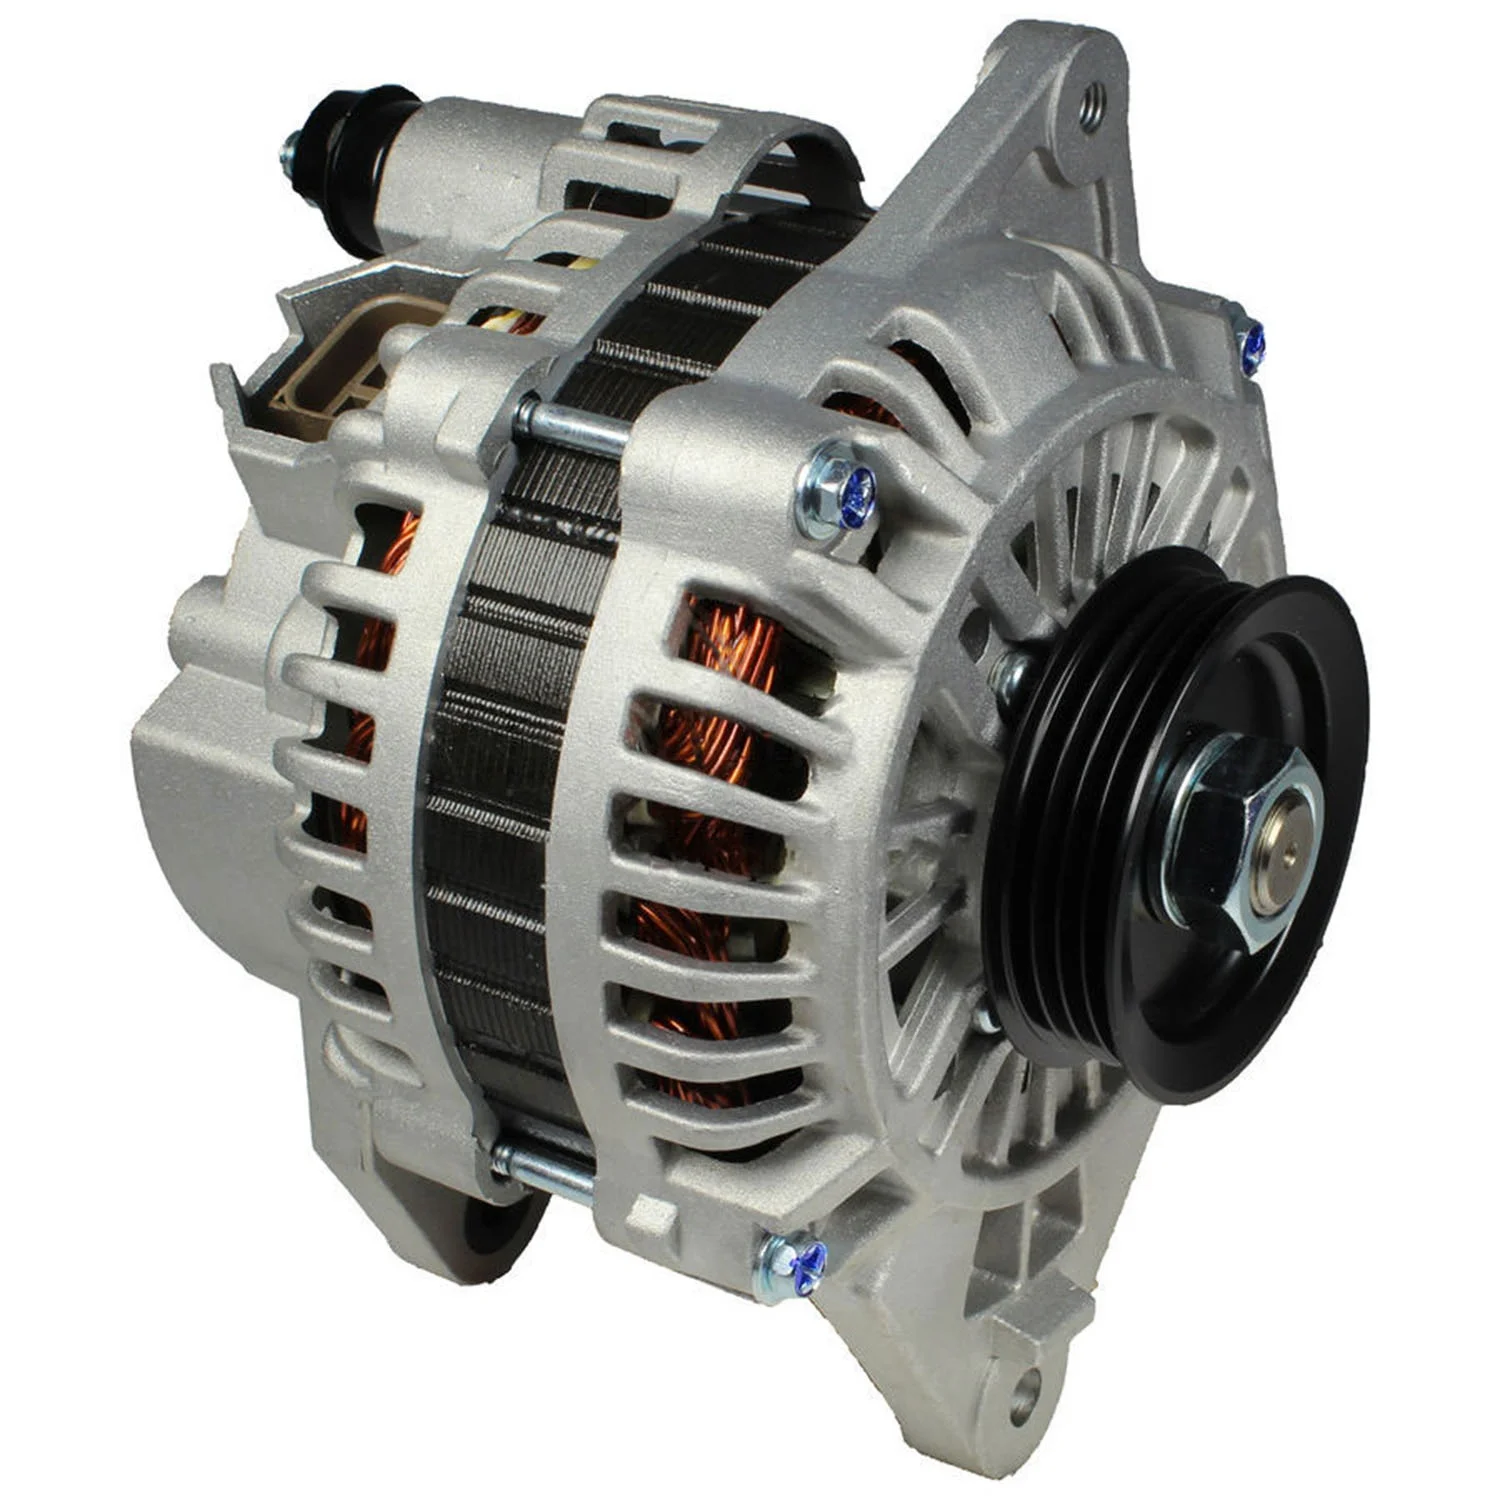 

Auto Dynamo Alternator Generator For Lucas Mitsubishi 114461 ALM4461BA ALM4461LP LRA02066 LRA2066 A3TA0991A MD313941 MD354802